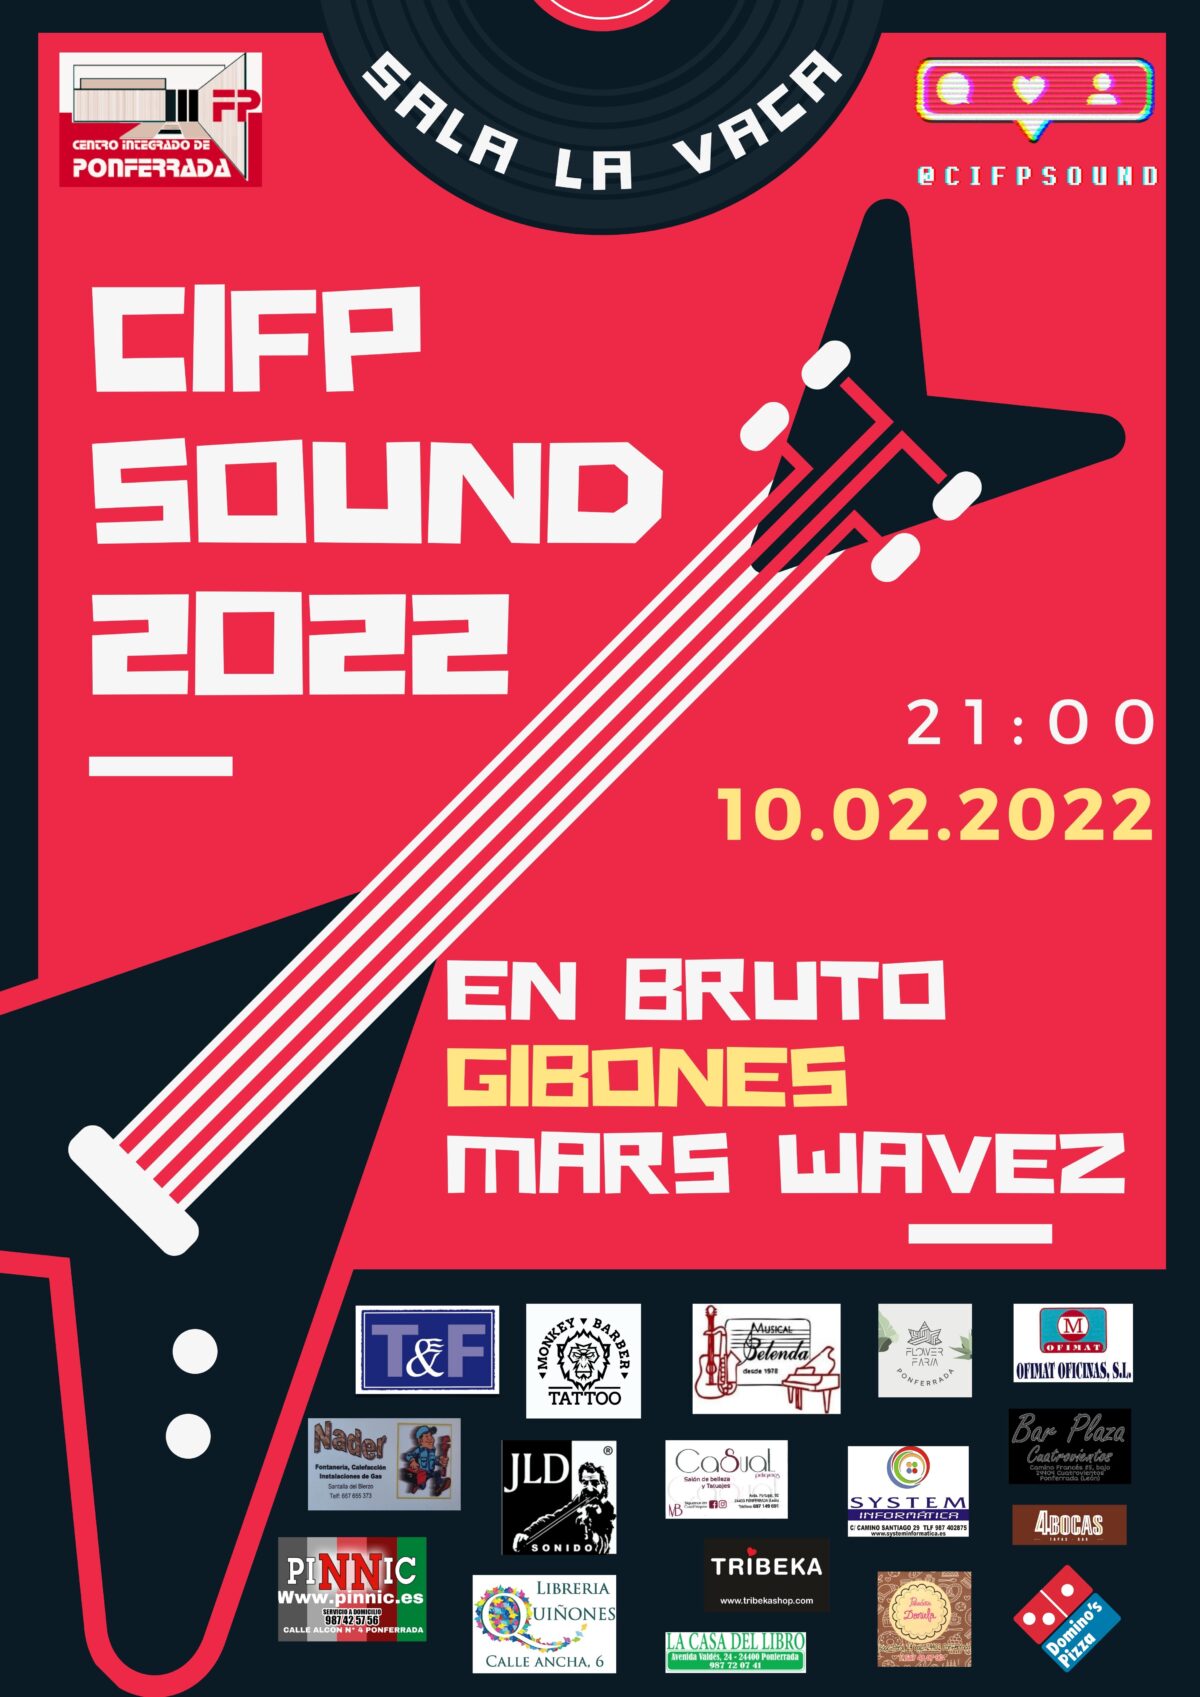 CIFP Sound Festival 2022